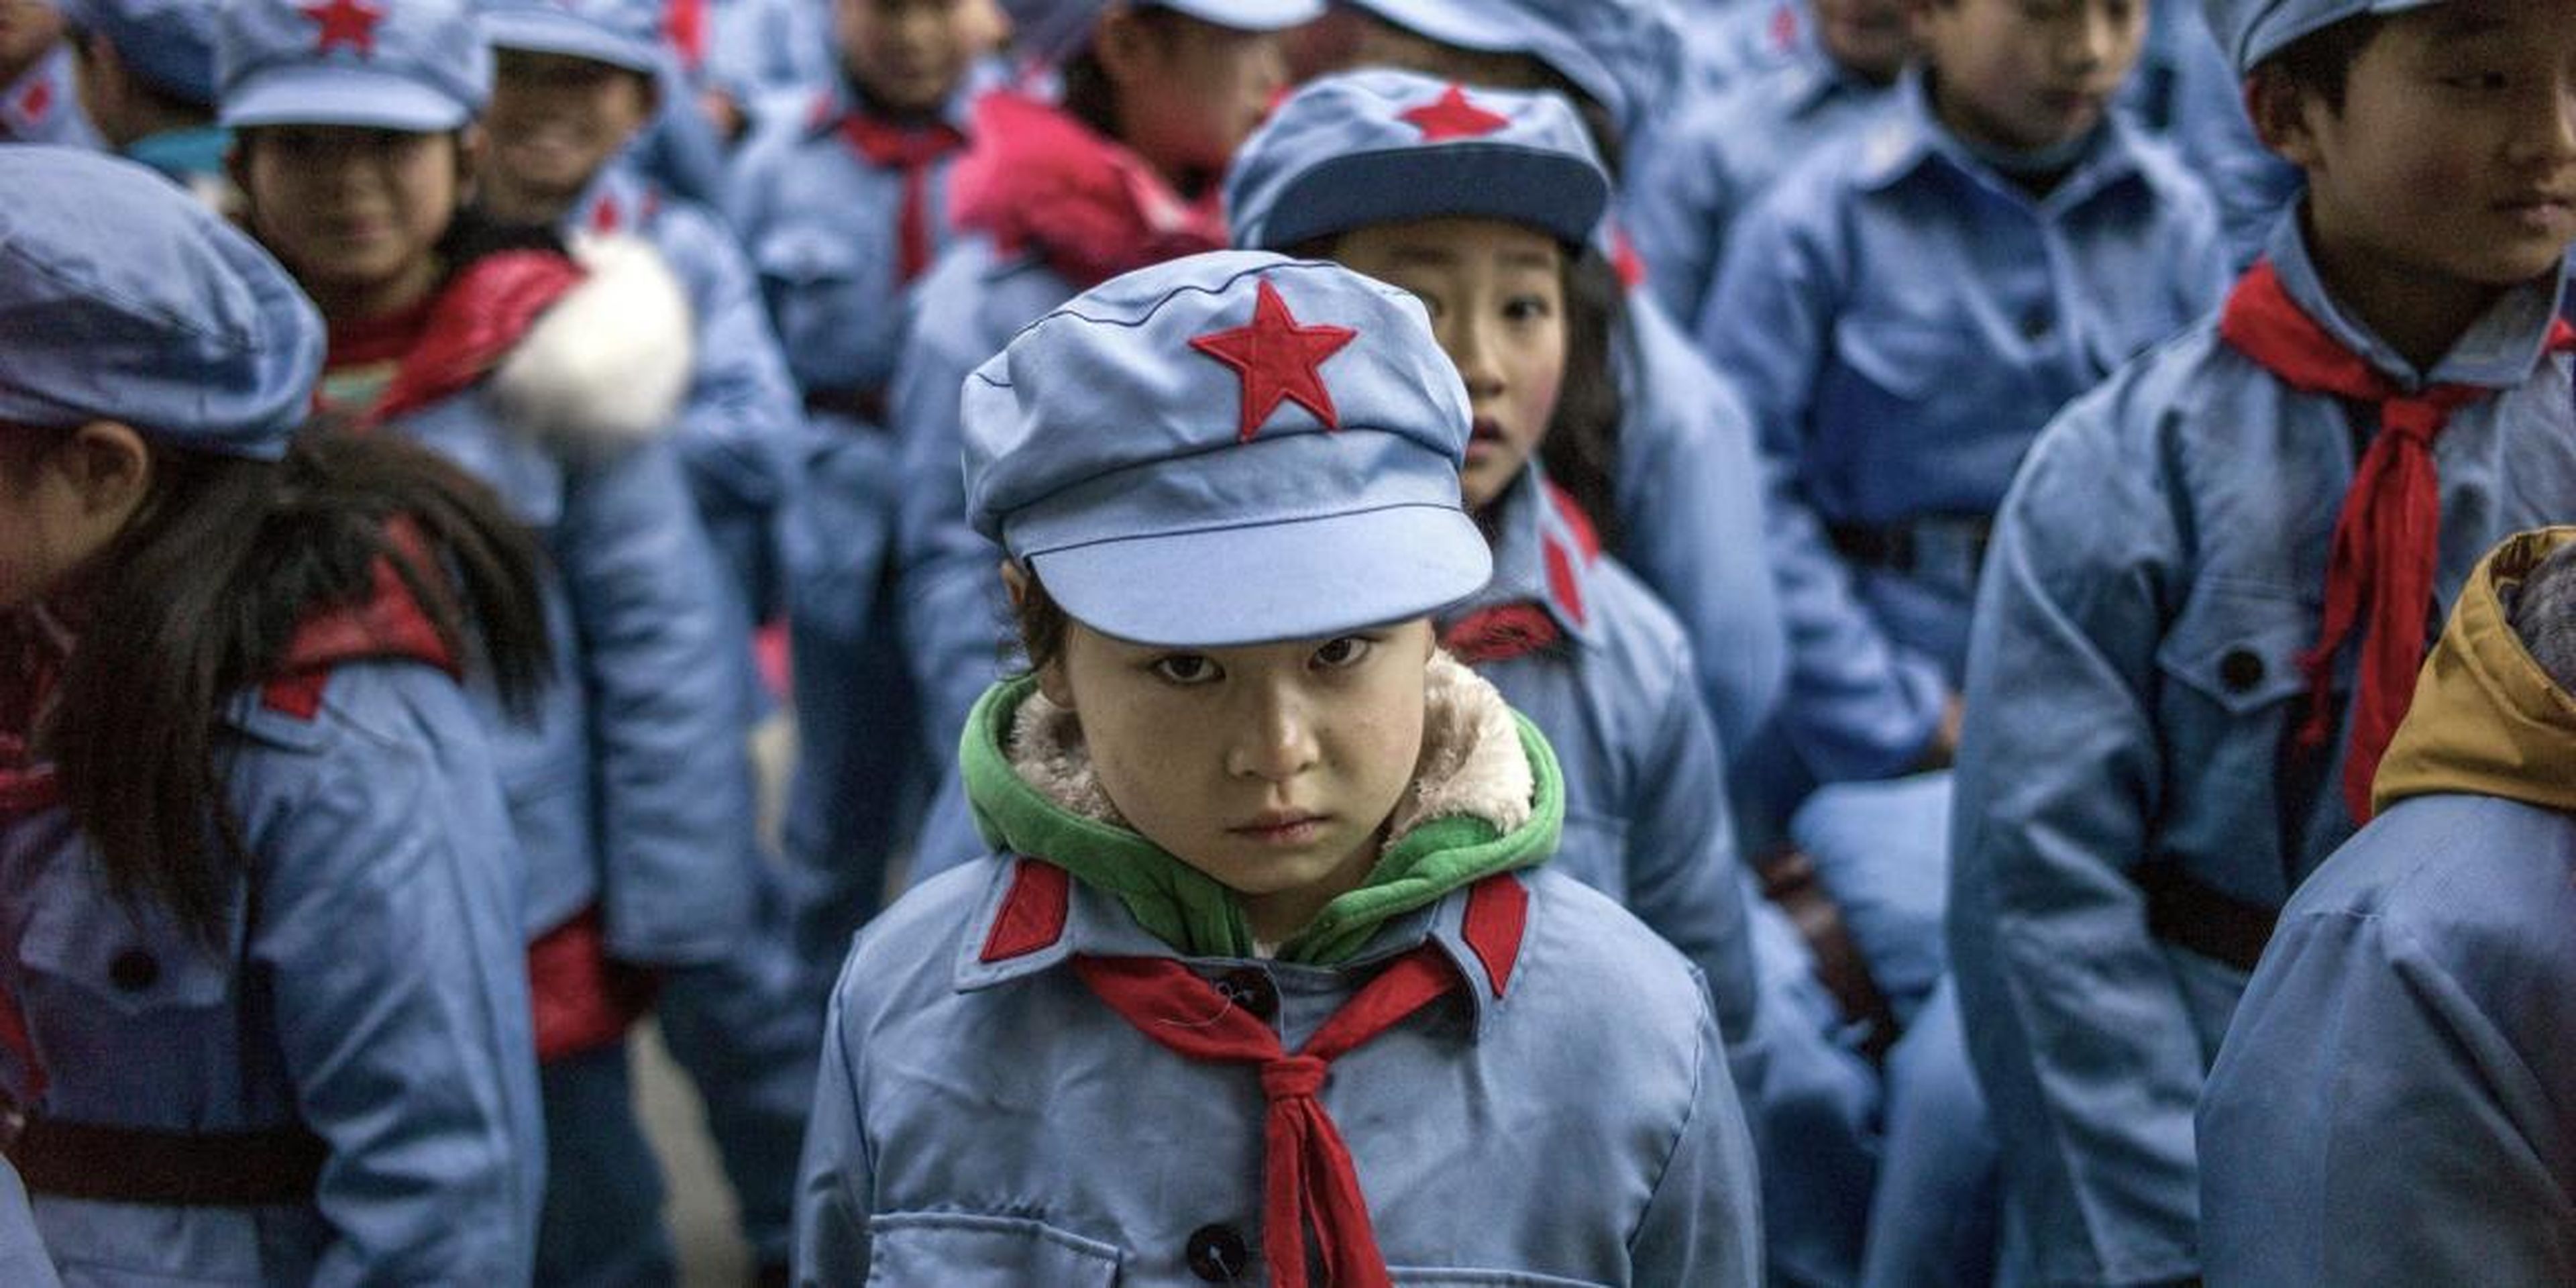 Children wearing uniforms in China.